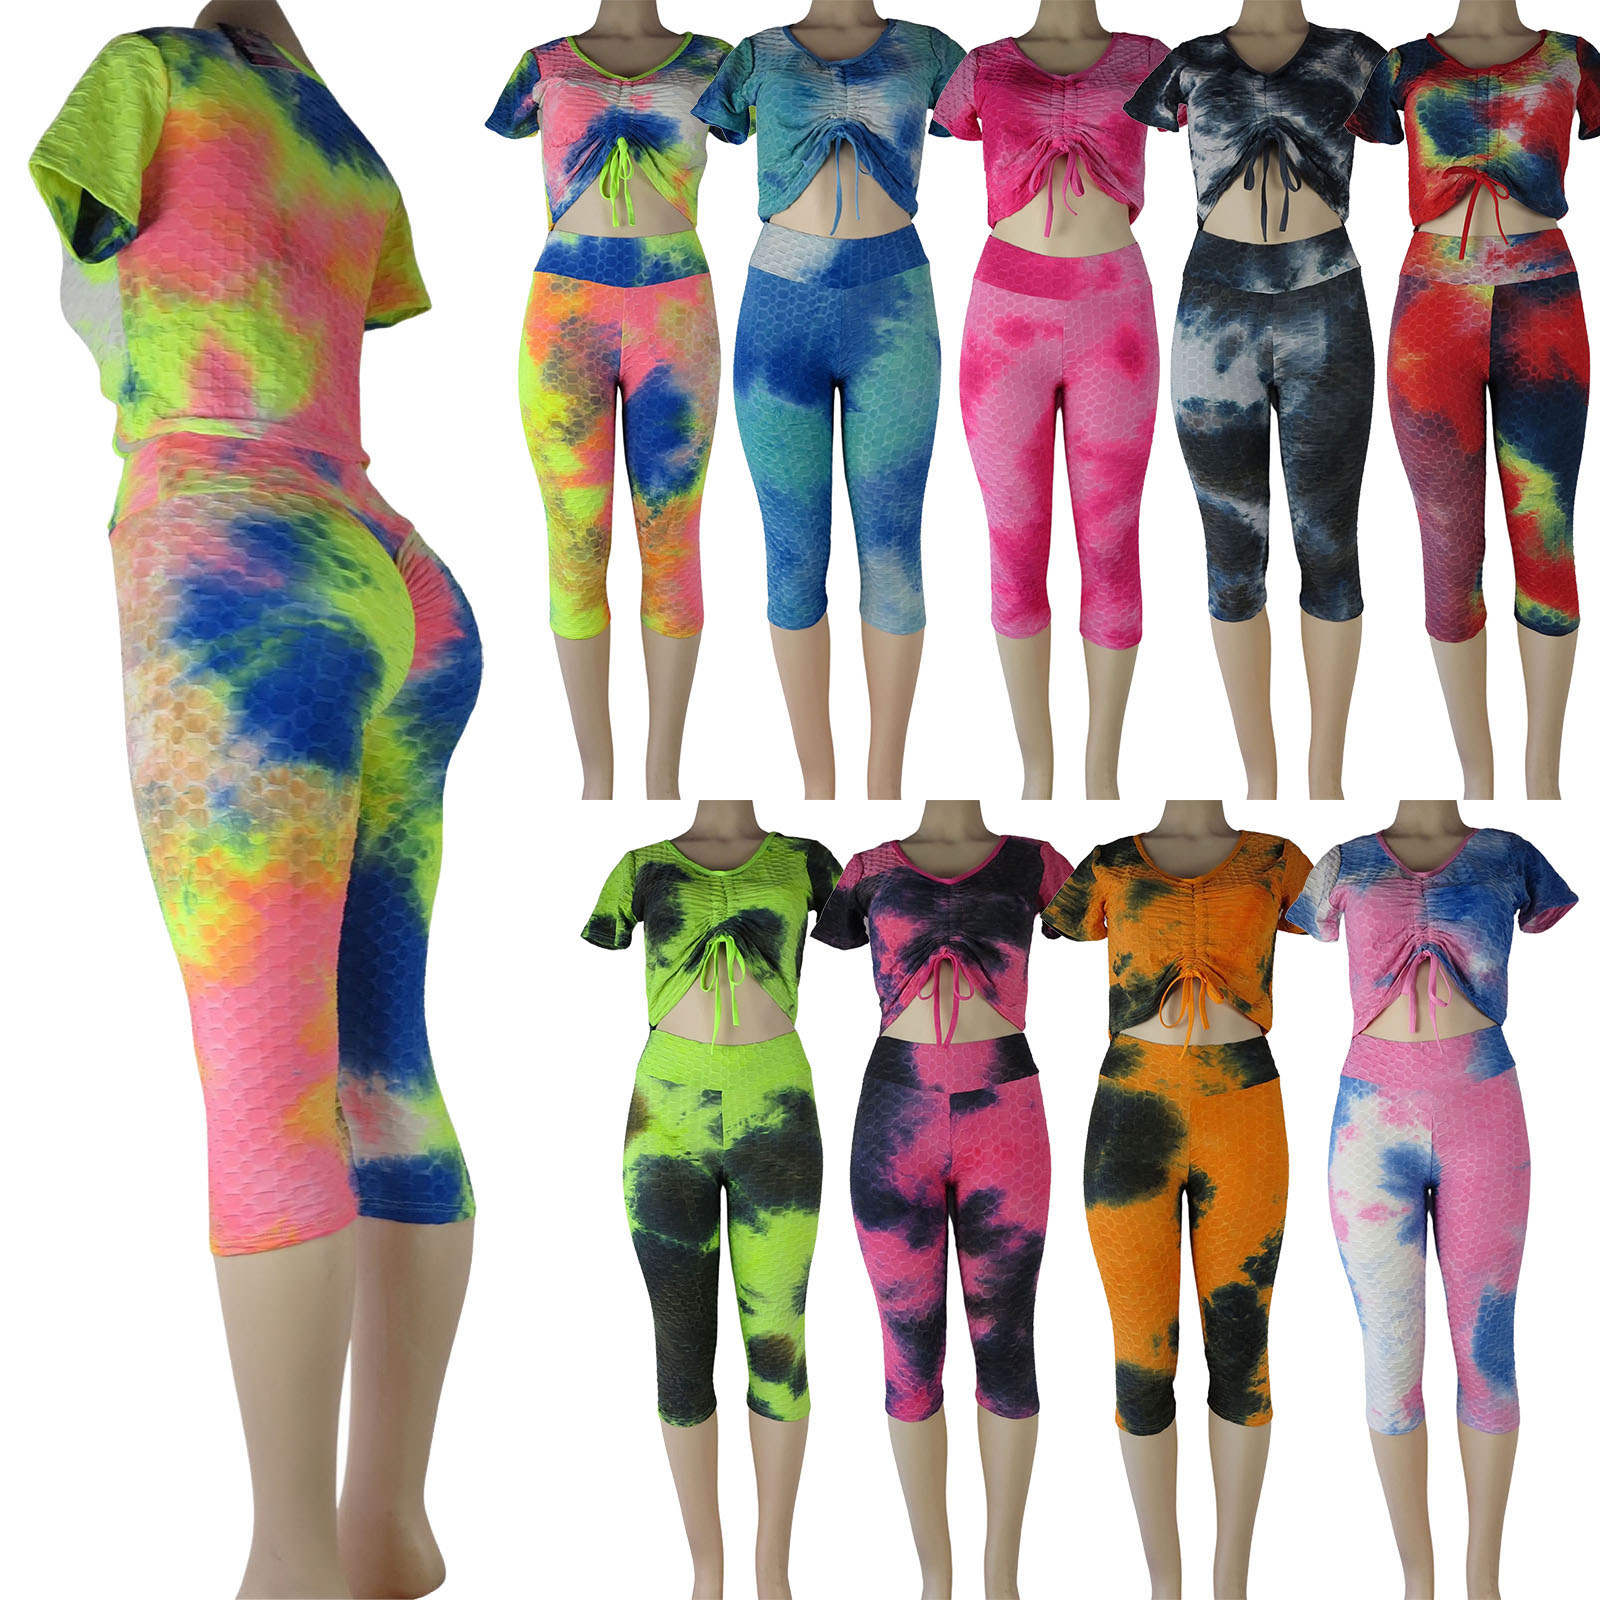 Women's Two-Piece Textured Anti-Cellulite SHIRT & Leggings Set - Tie-Dye Multi-Colors